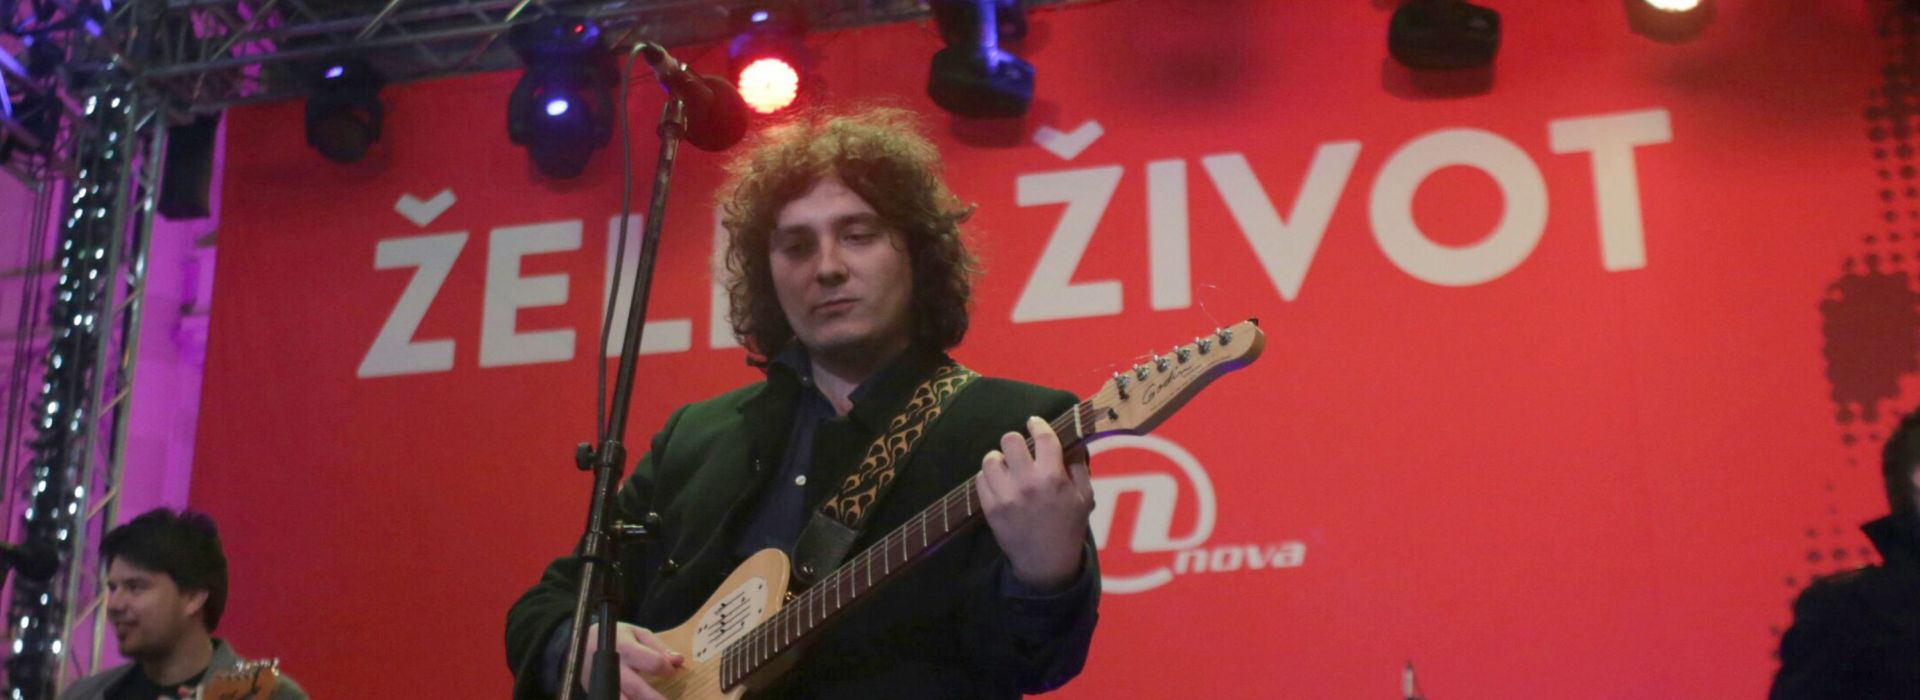 Zagreb, 21.12.2015 - Humanitarni koncert 'elim ivot' Zaklade Ana Rukavina. Na slici Mejai. foto HINA/ Tomislav PAVLEK/ ik